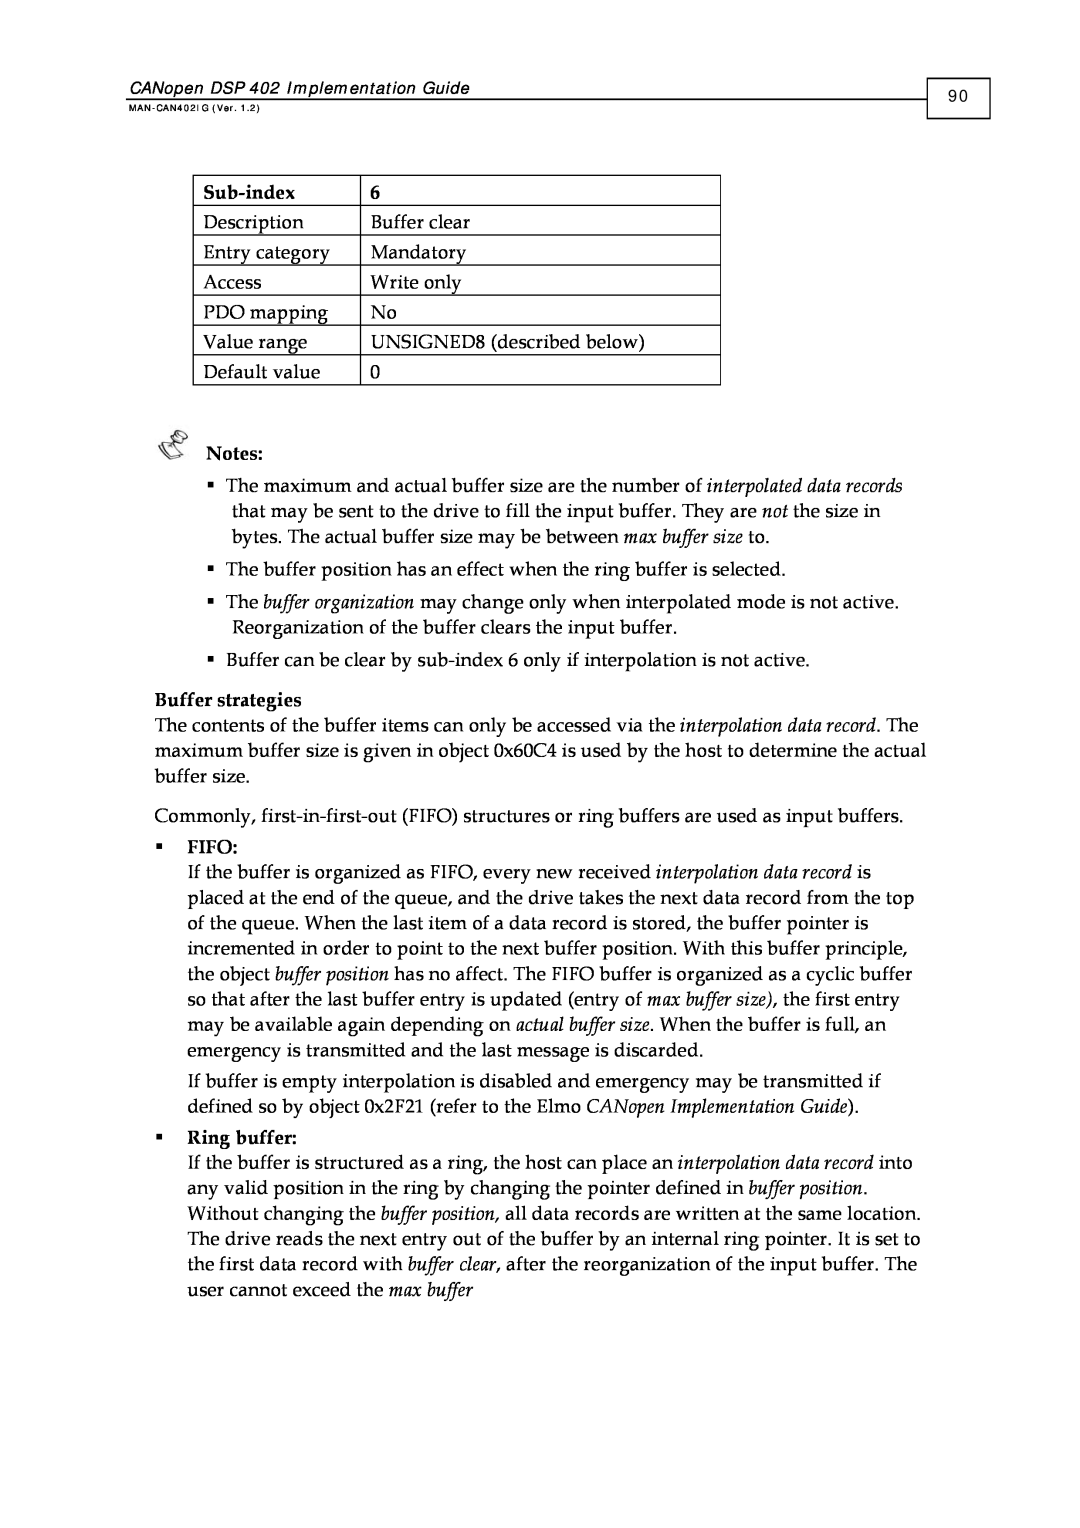 Elmo DSP 402 manual Sub-index, Buffer strategies, Fifo, Ring buffer 